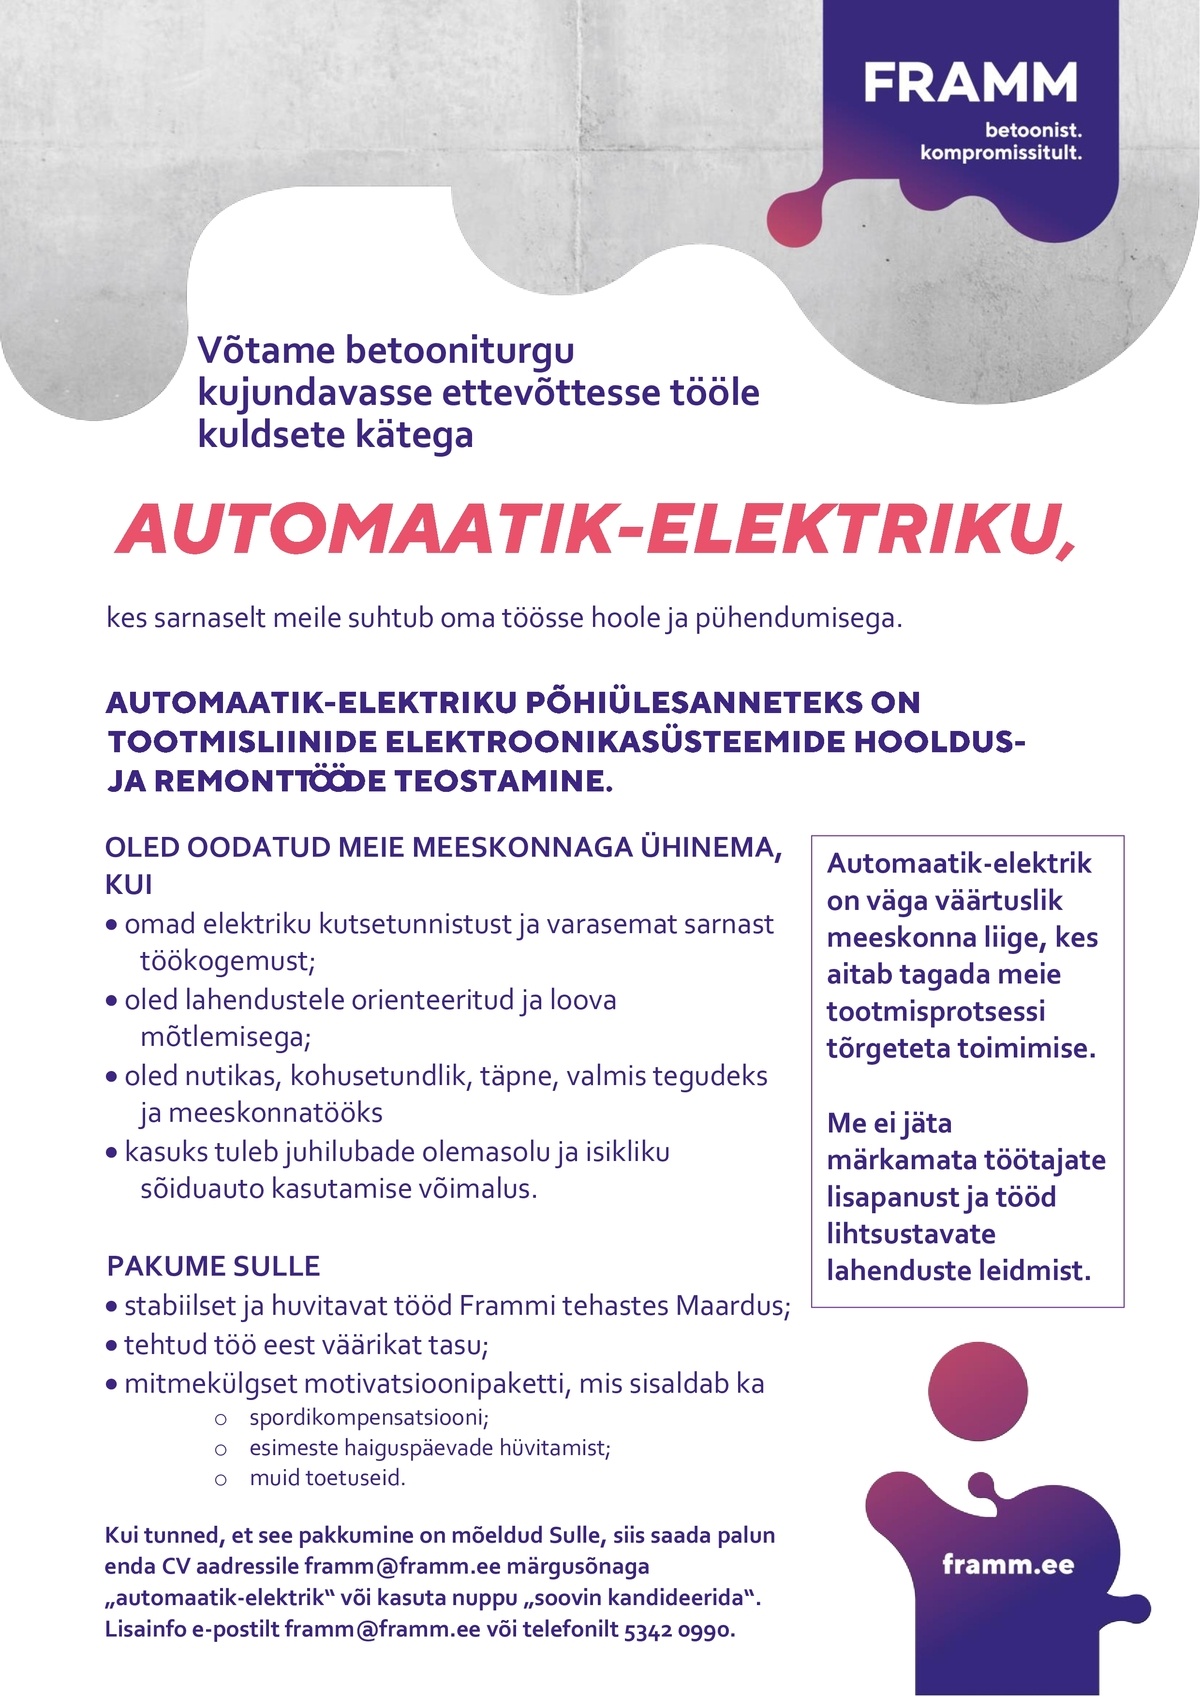 AS Framm Automaatik-elektrik